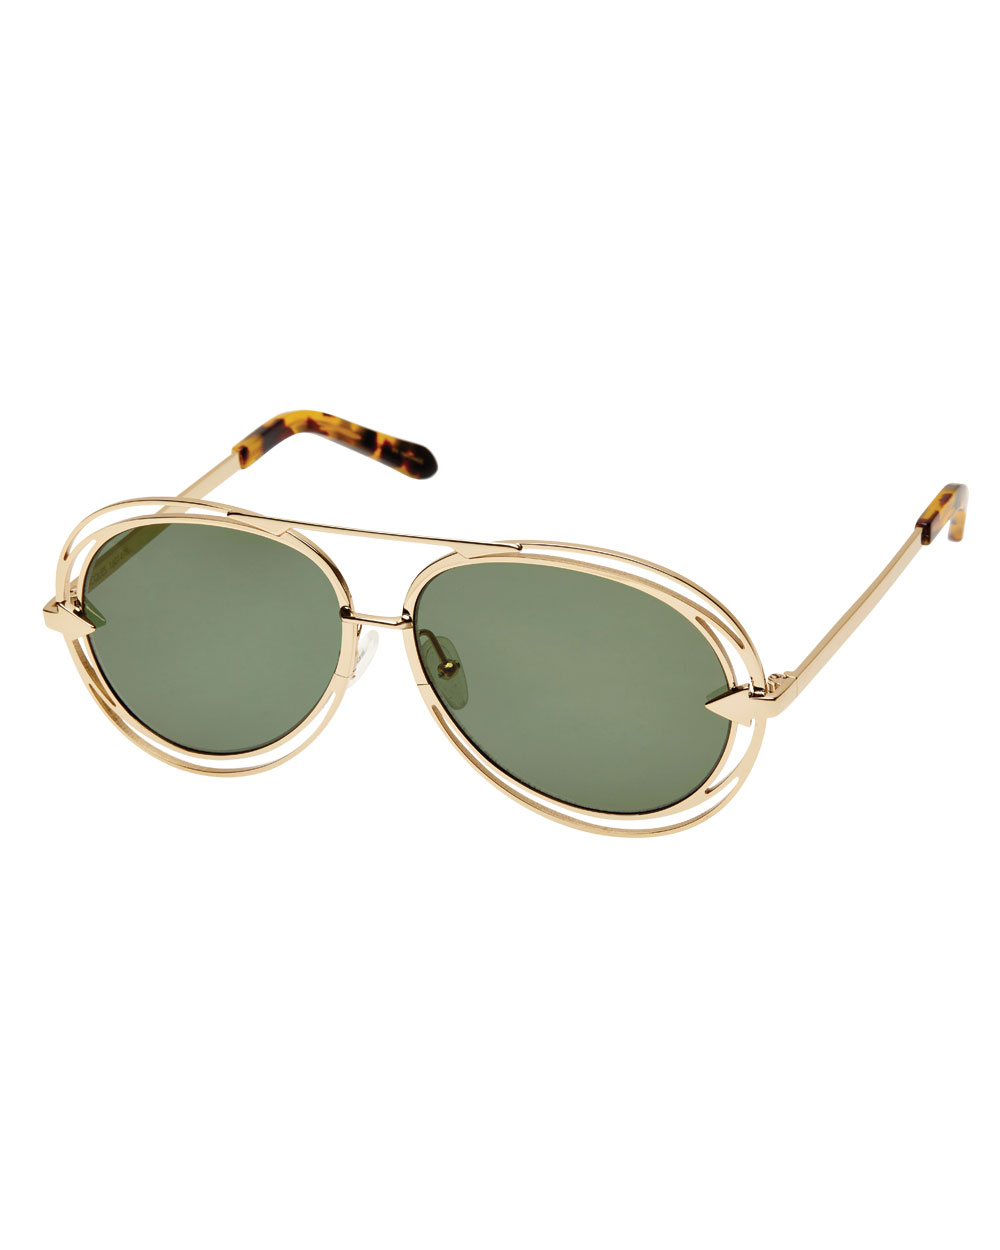 Karen Walker Eyewear sunglasses, $459